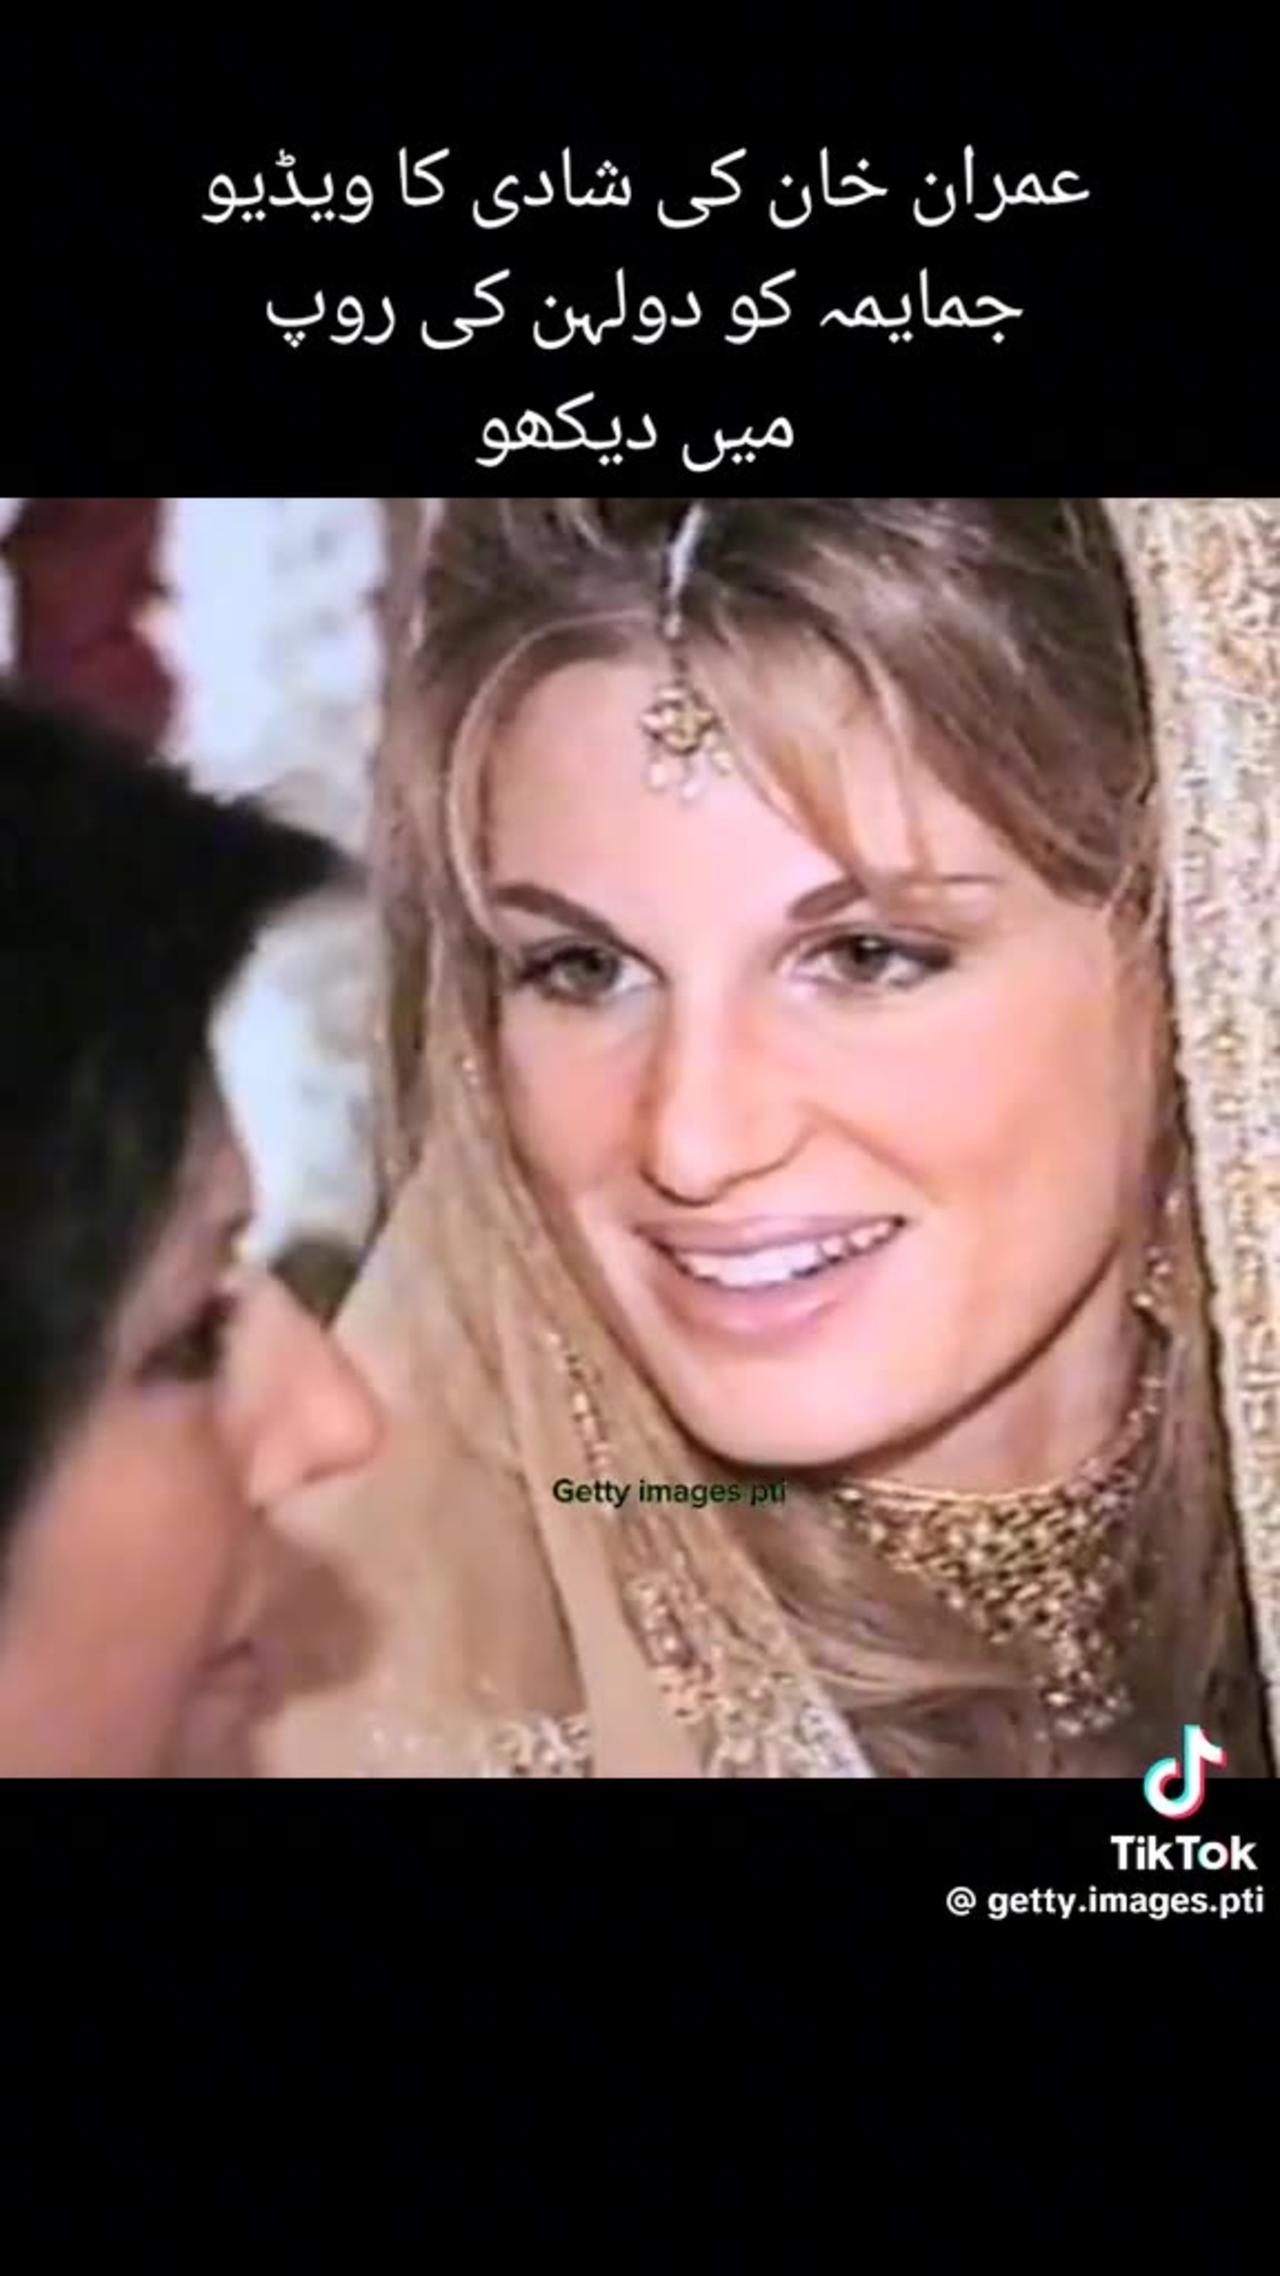 Imran Khan's wedding clip